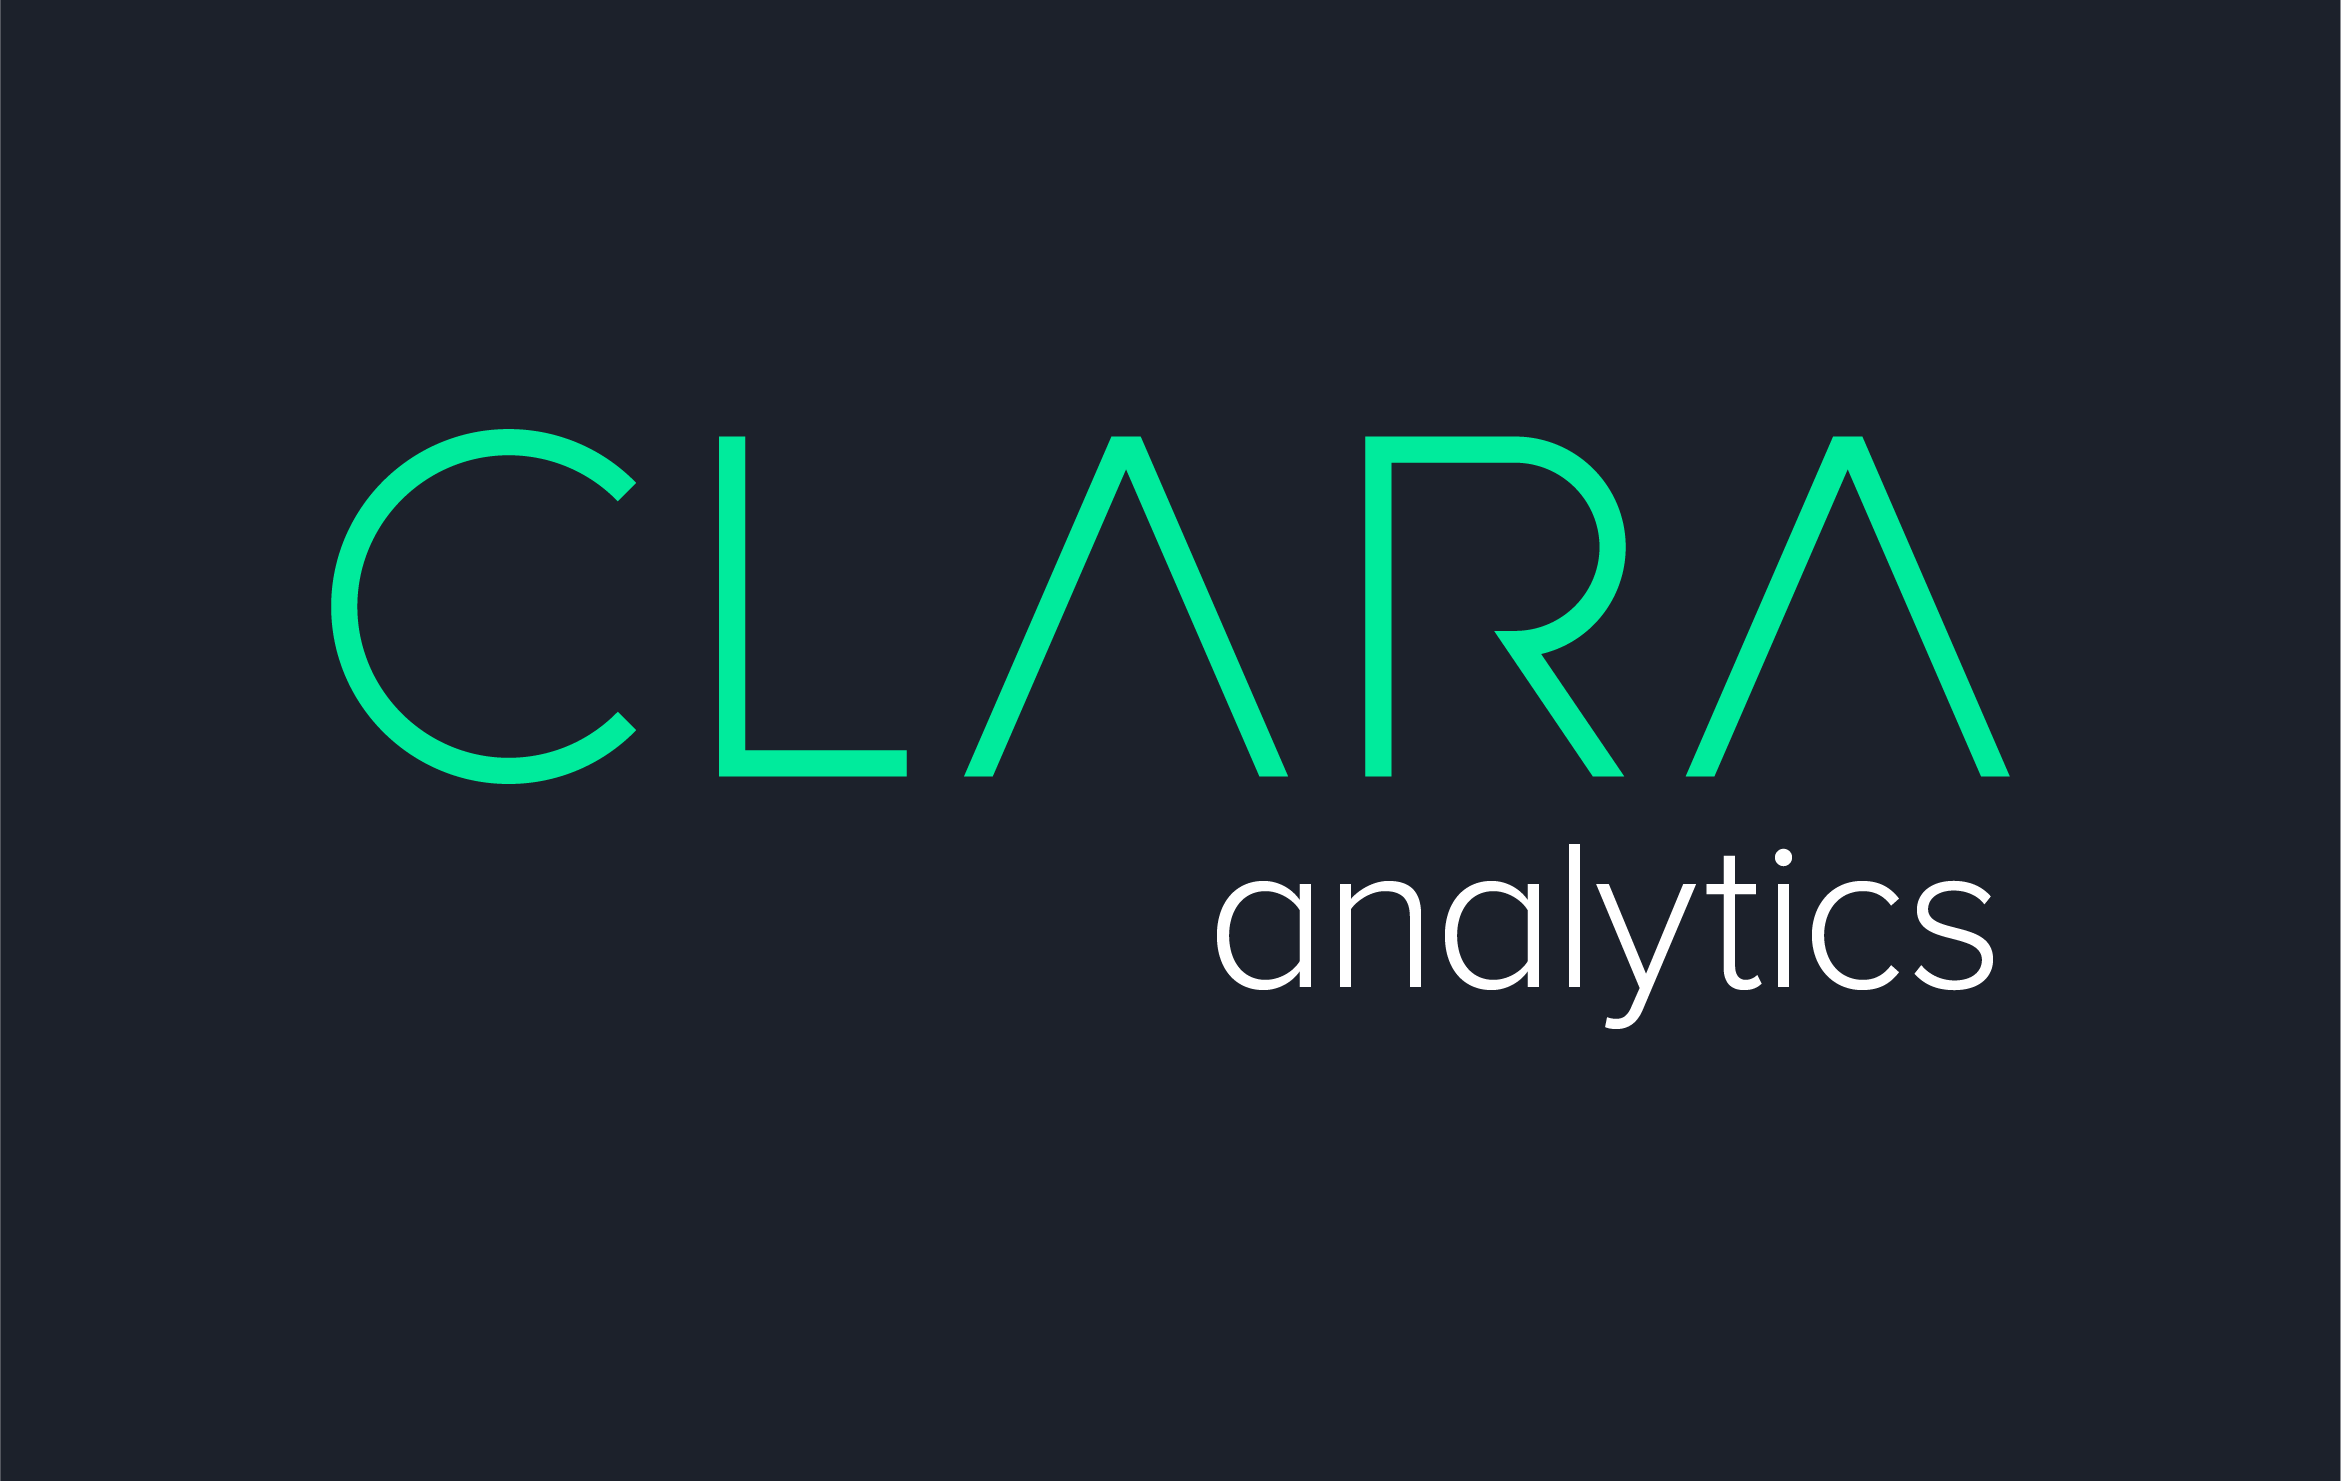 CLARA analytics adds Andrew Pinkes, Dave Hollander to board